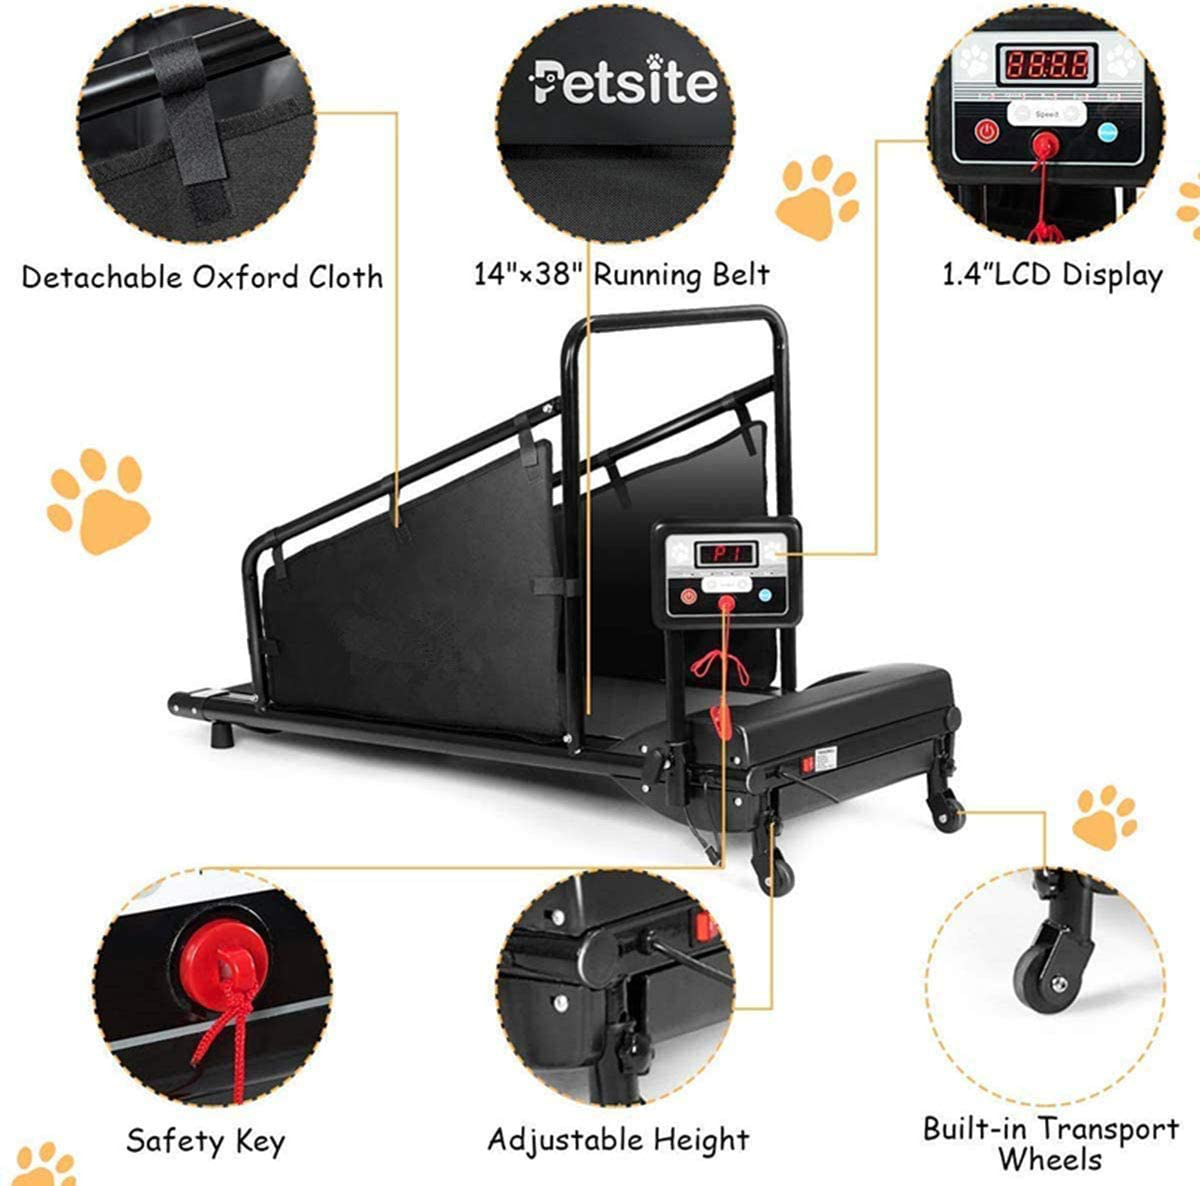 GYMAX Dog Treadmill, Small/Medium Dog Running Machine with LCD